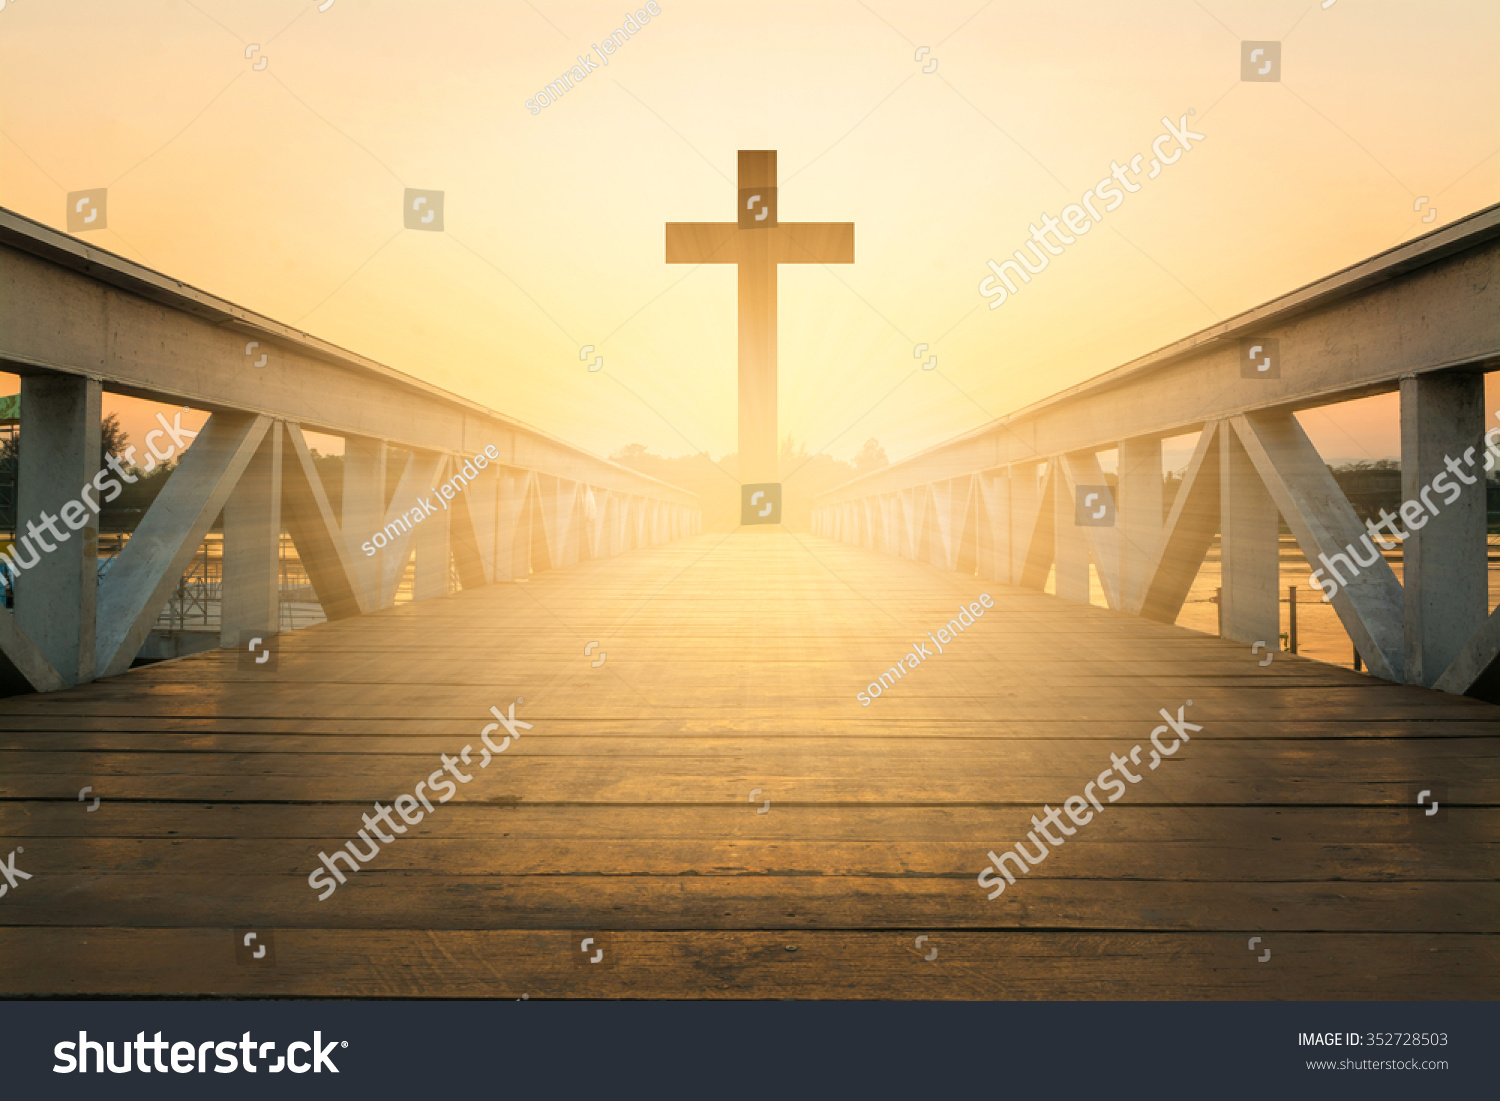 silhouette christian cross at railhead wooden bridge and orange sky with lighting,religion concept #352728503